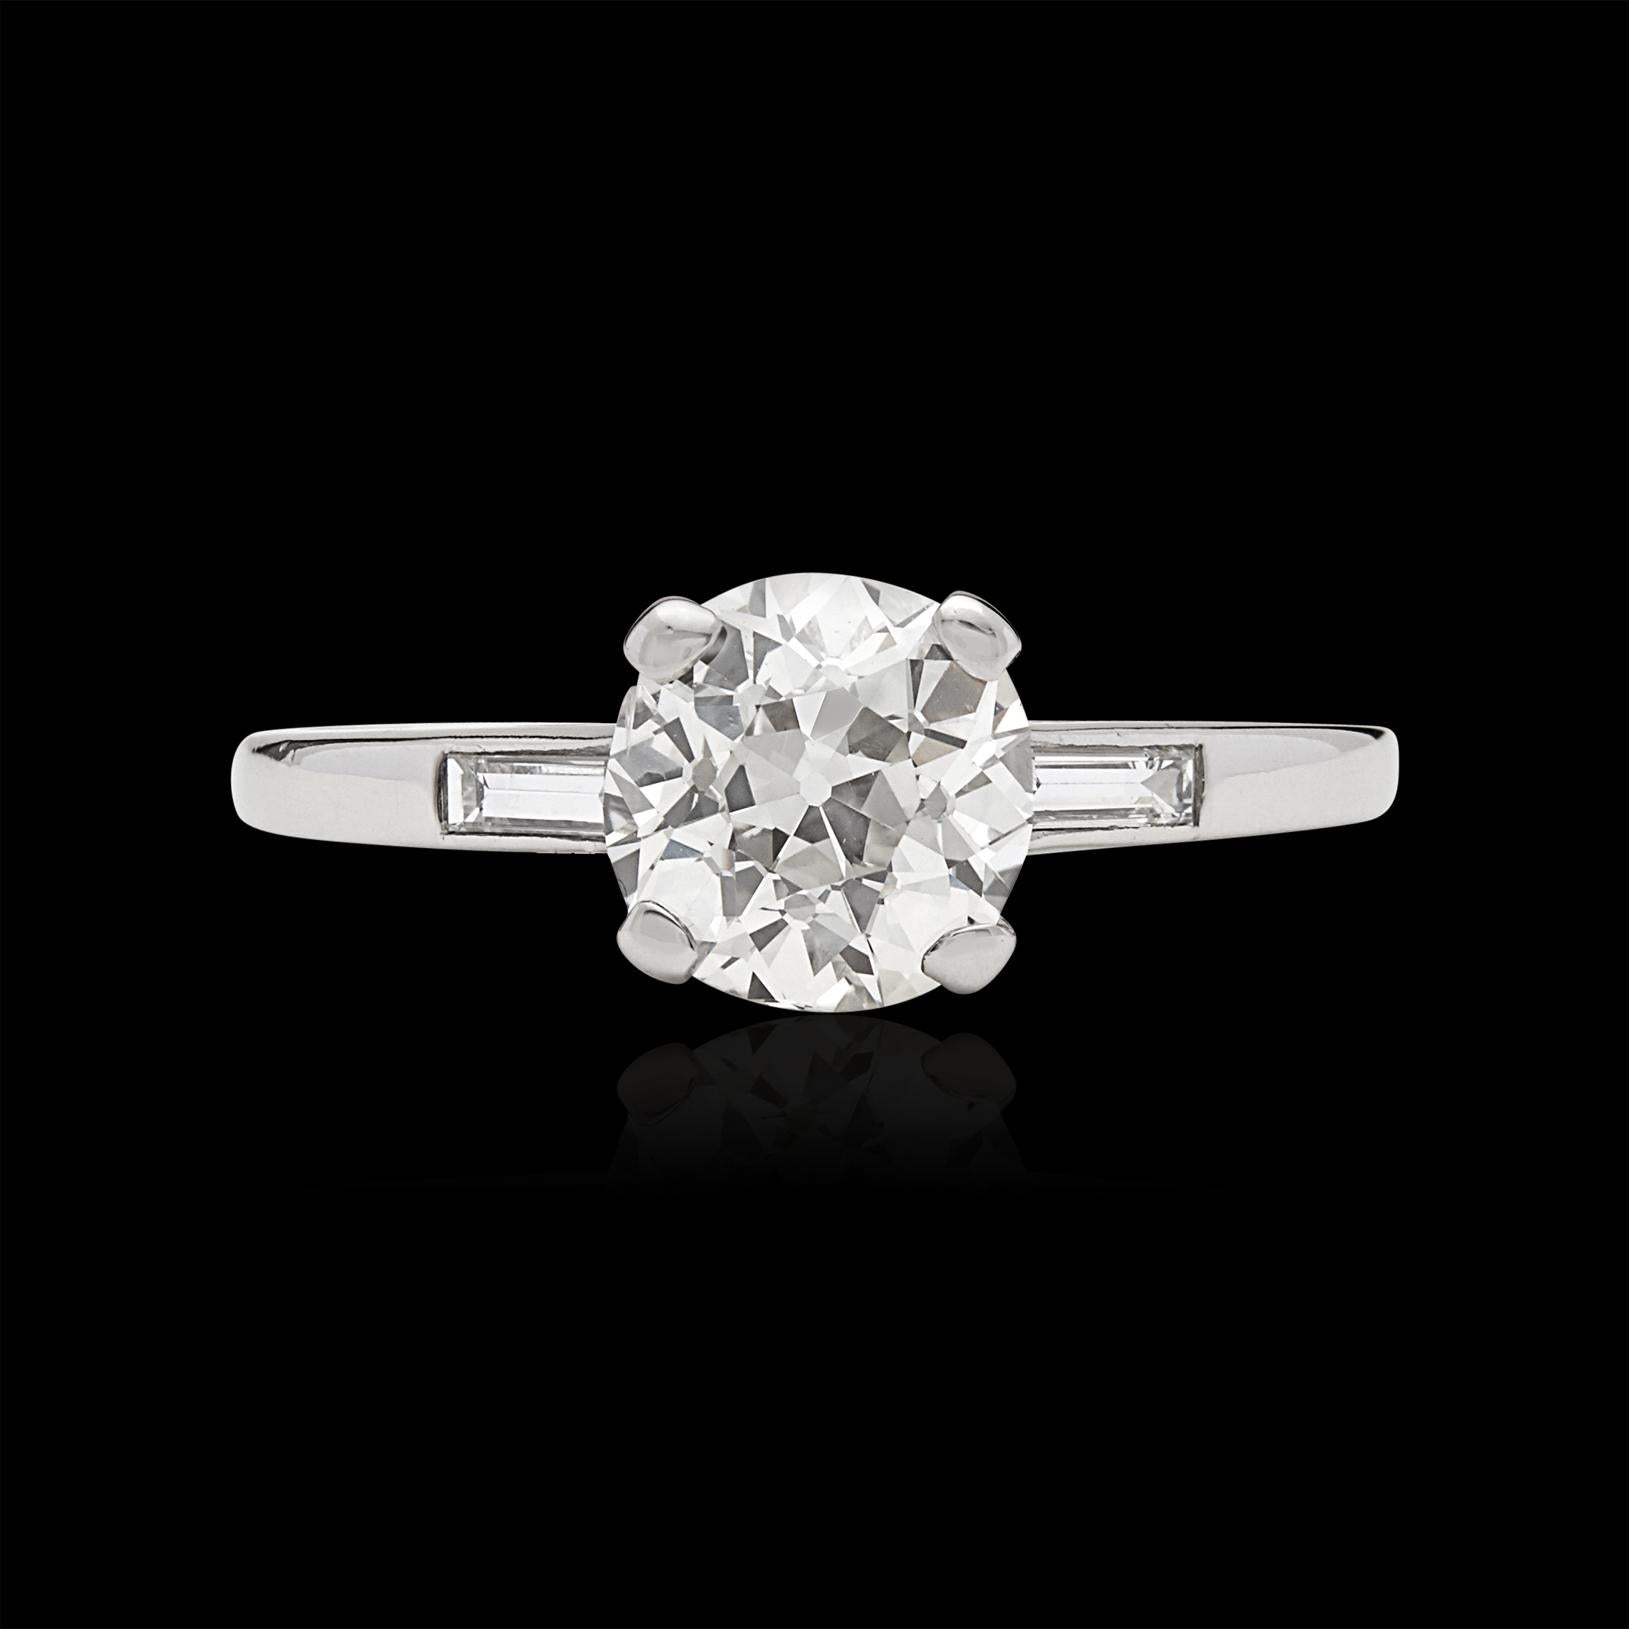 1.63 carat diamond ring